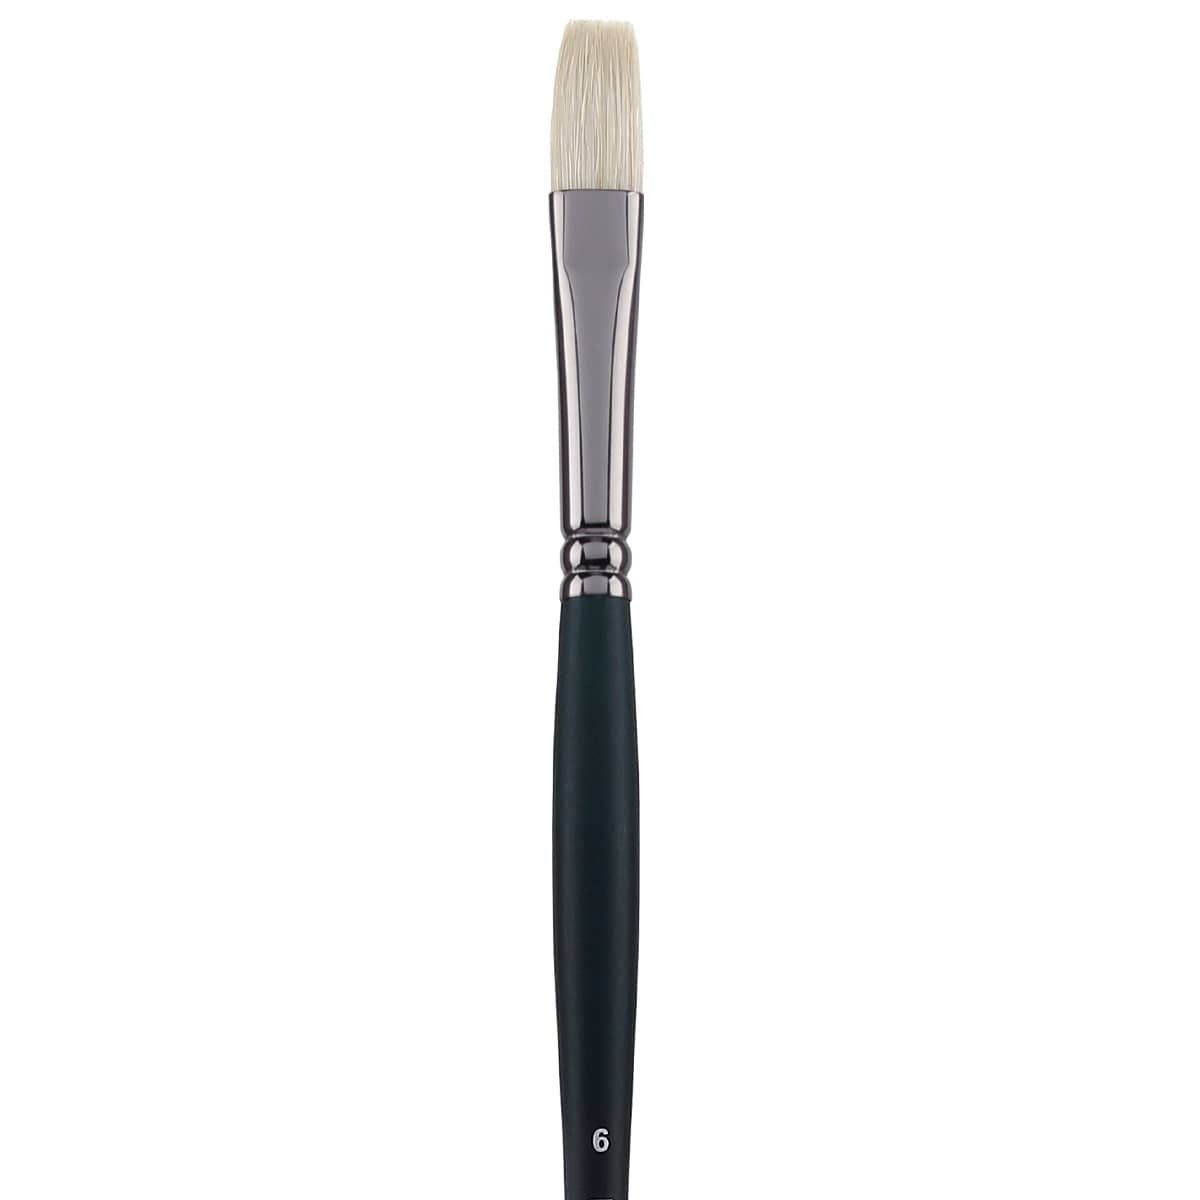 Imperial Professional Chungking Hog Bristle Brush, Flat Size #6